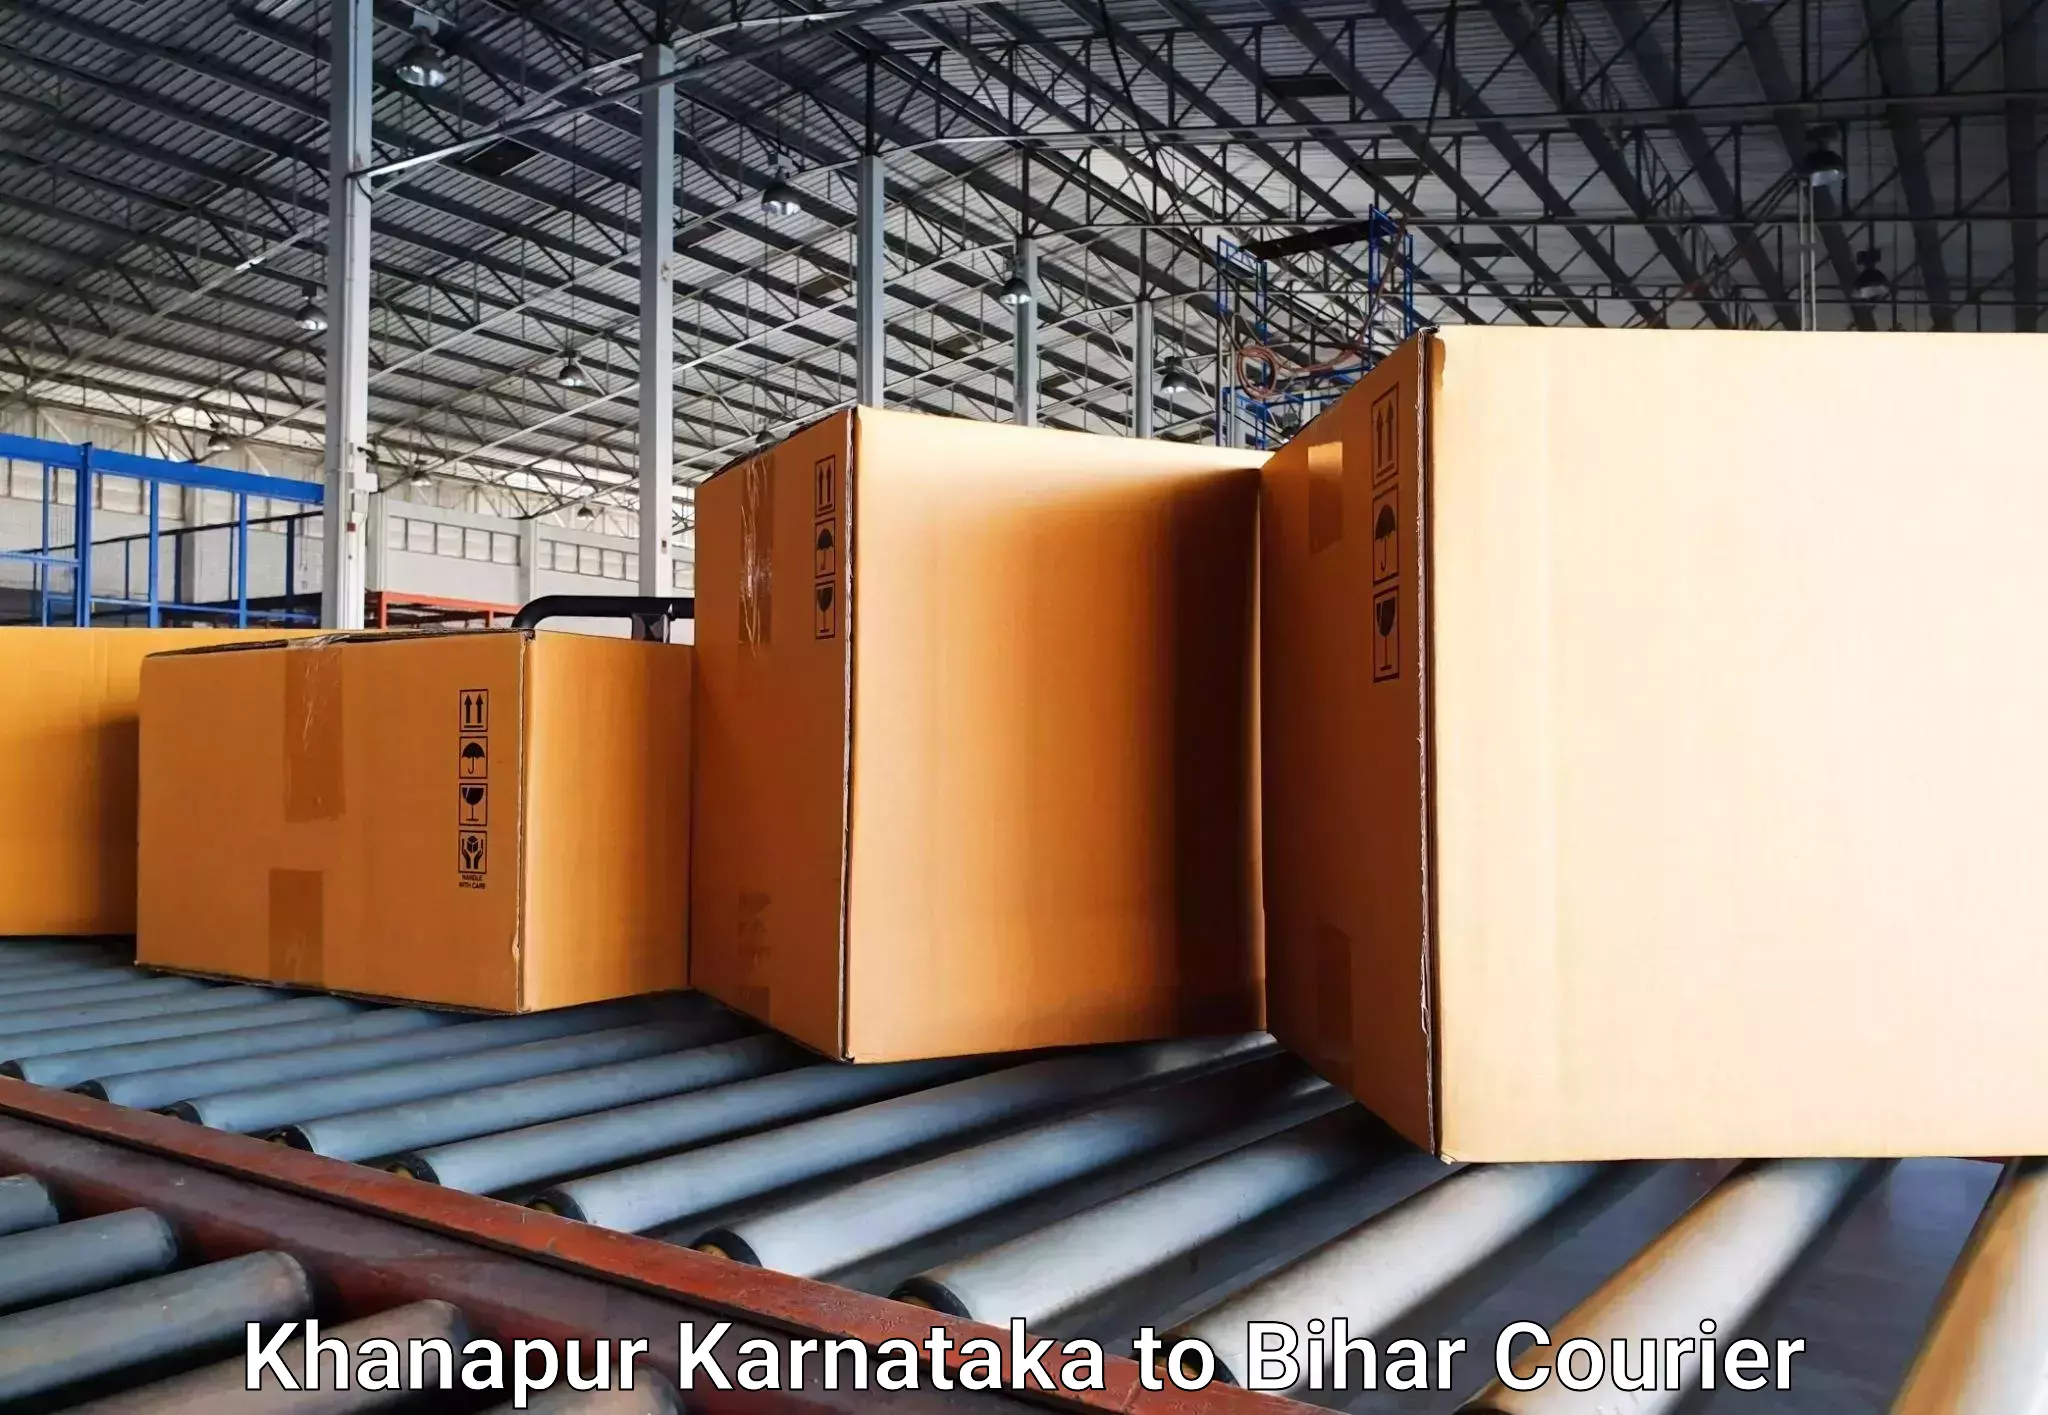 Door to door luggage delivery in Khanapur Karnataka to Jhanjharpur